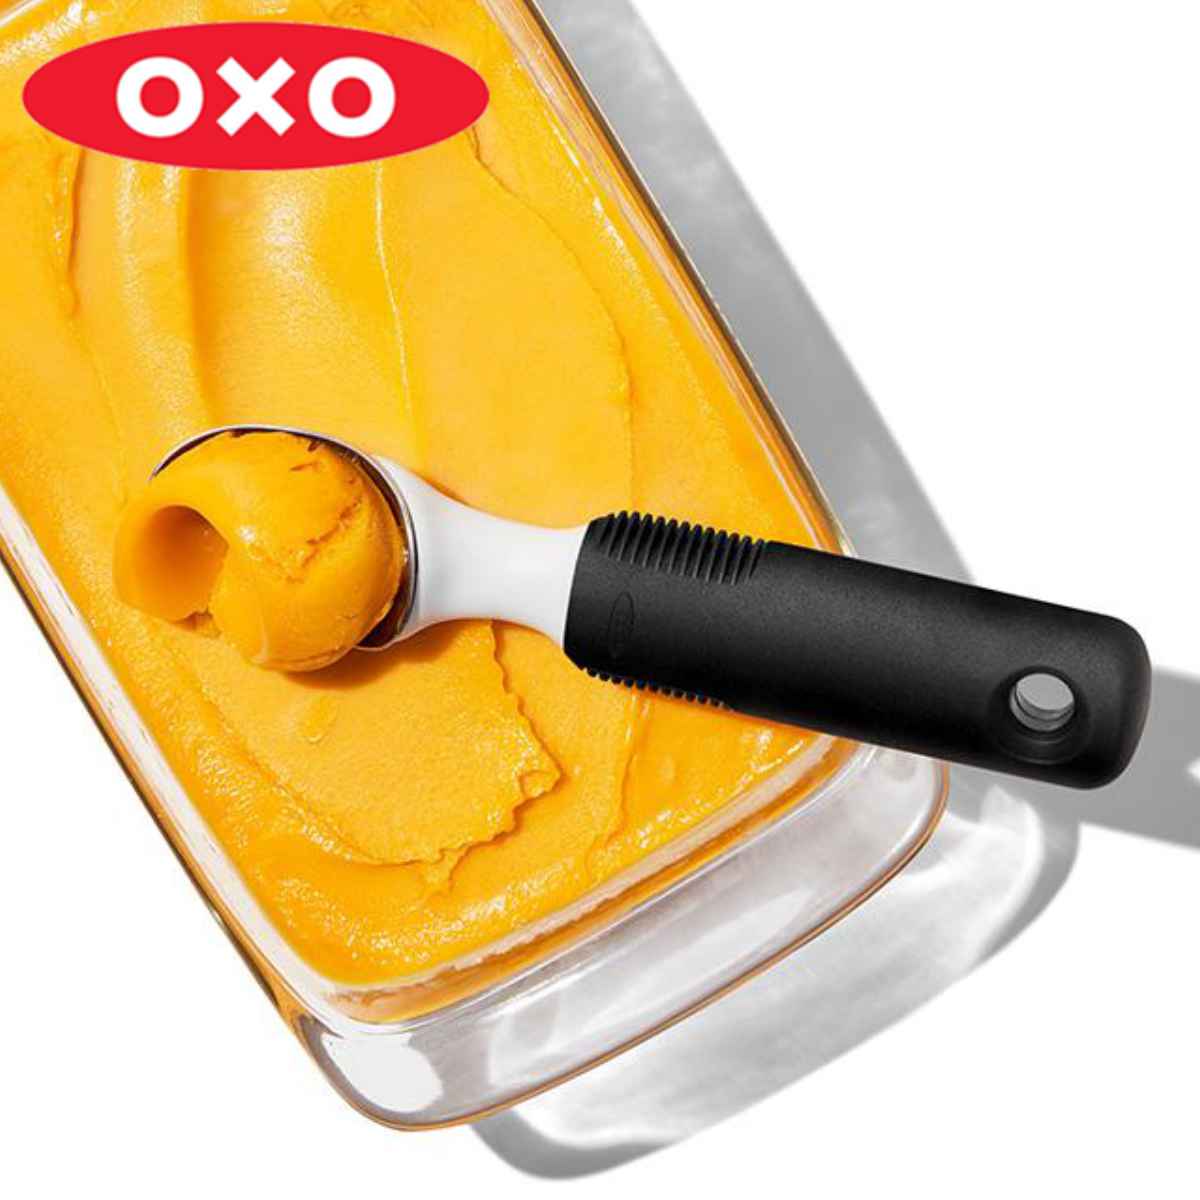 OXO アイスクリームスクープ 20cm ステンレス製 （ オクソー 食洗機対応 スクープ スクーパー アイスクリームディッシャー アイス 盛りつけ アイスクリームスクーパー ディッシャー 氷菓 アイスクリーム すくう ） 【3980円以上送料無料】画像